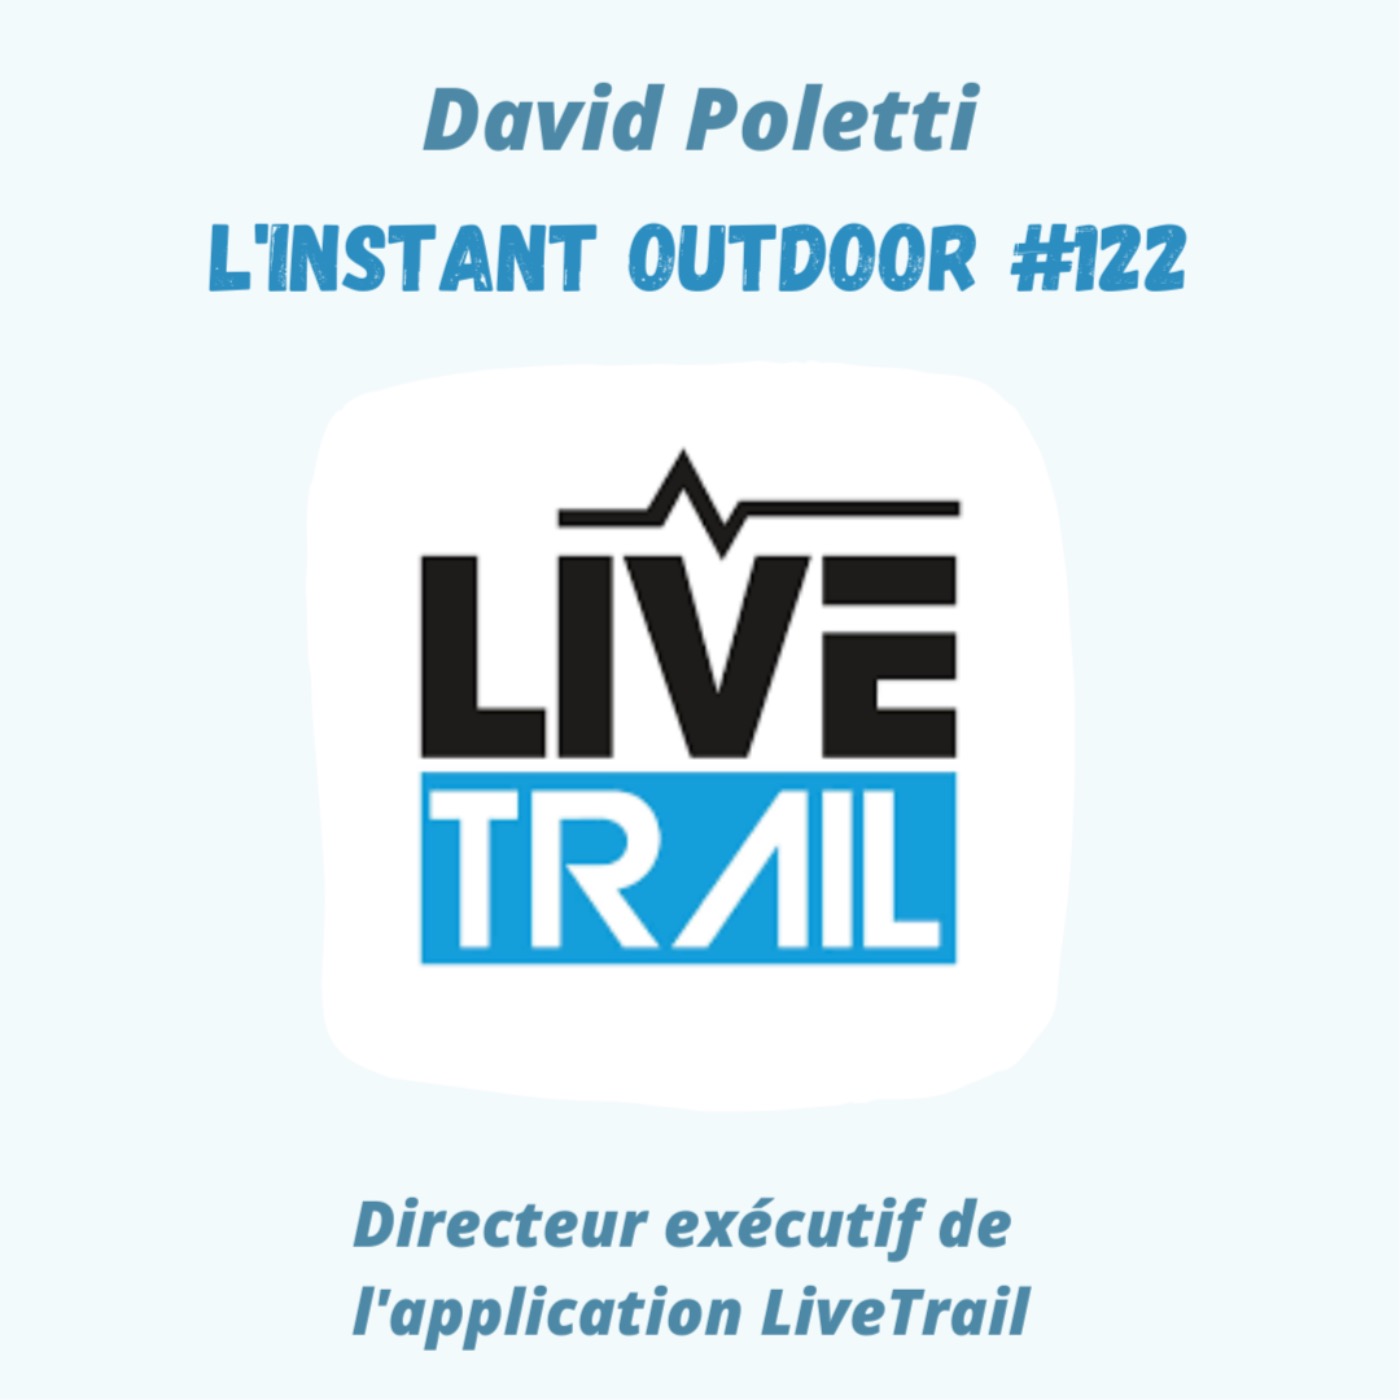 David Poletti - Directeur exécutif de l'application LiveTrail